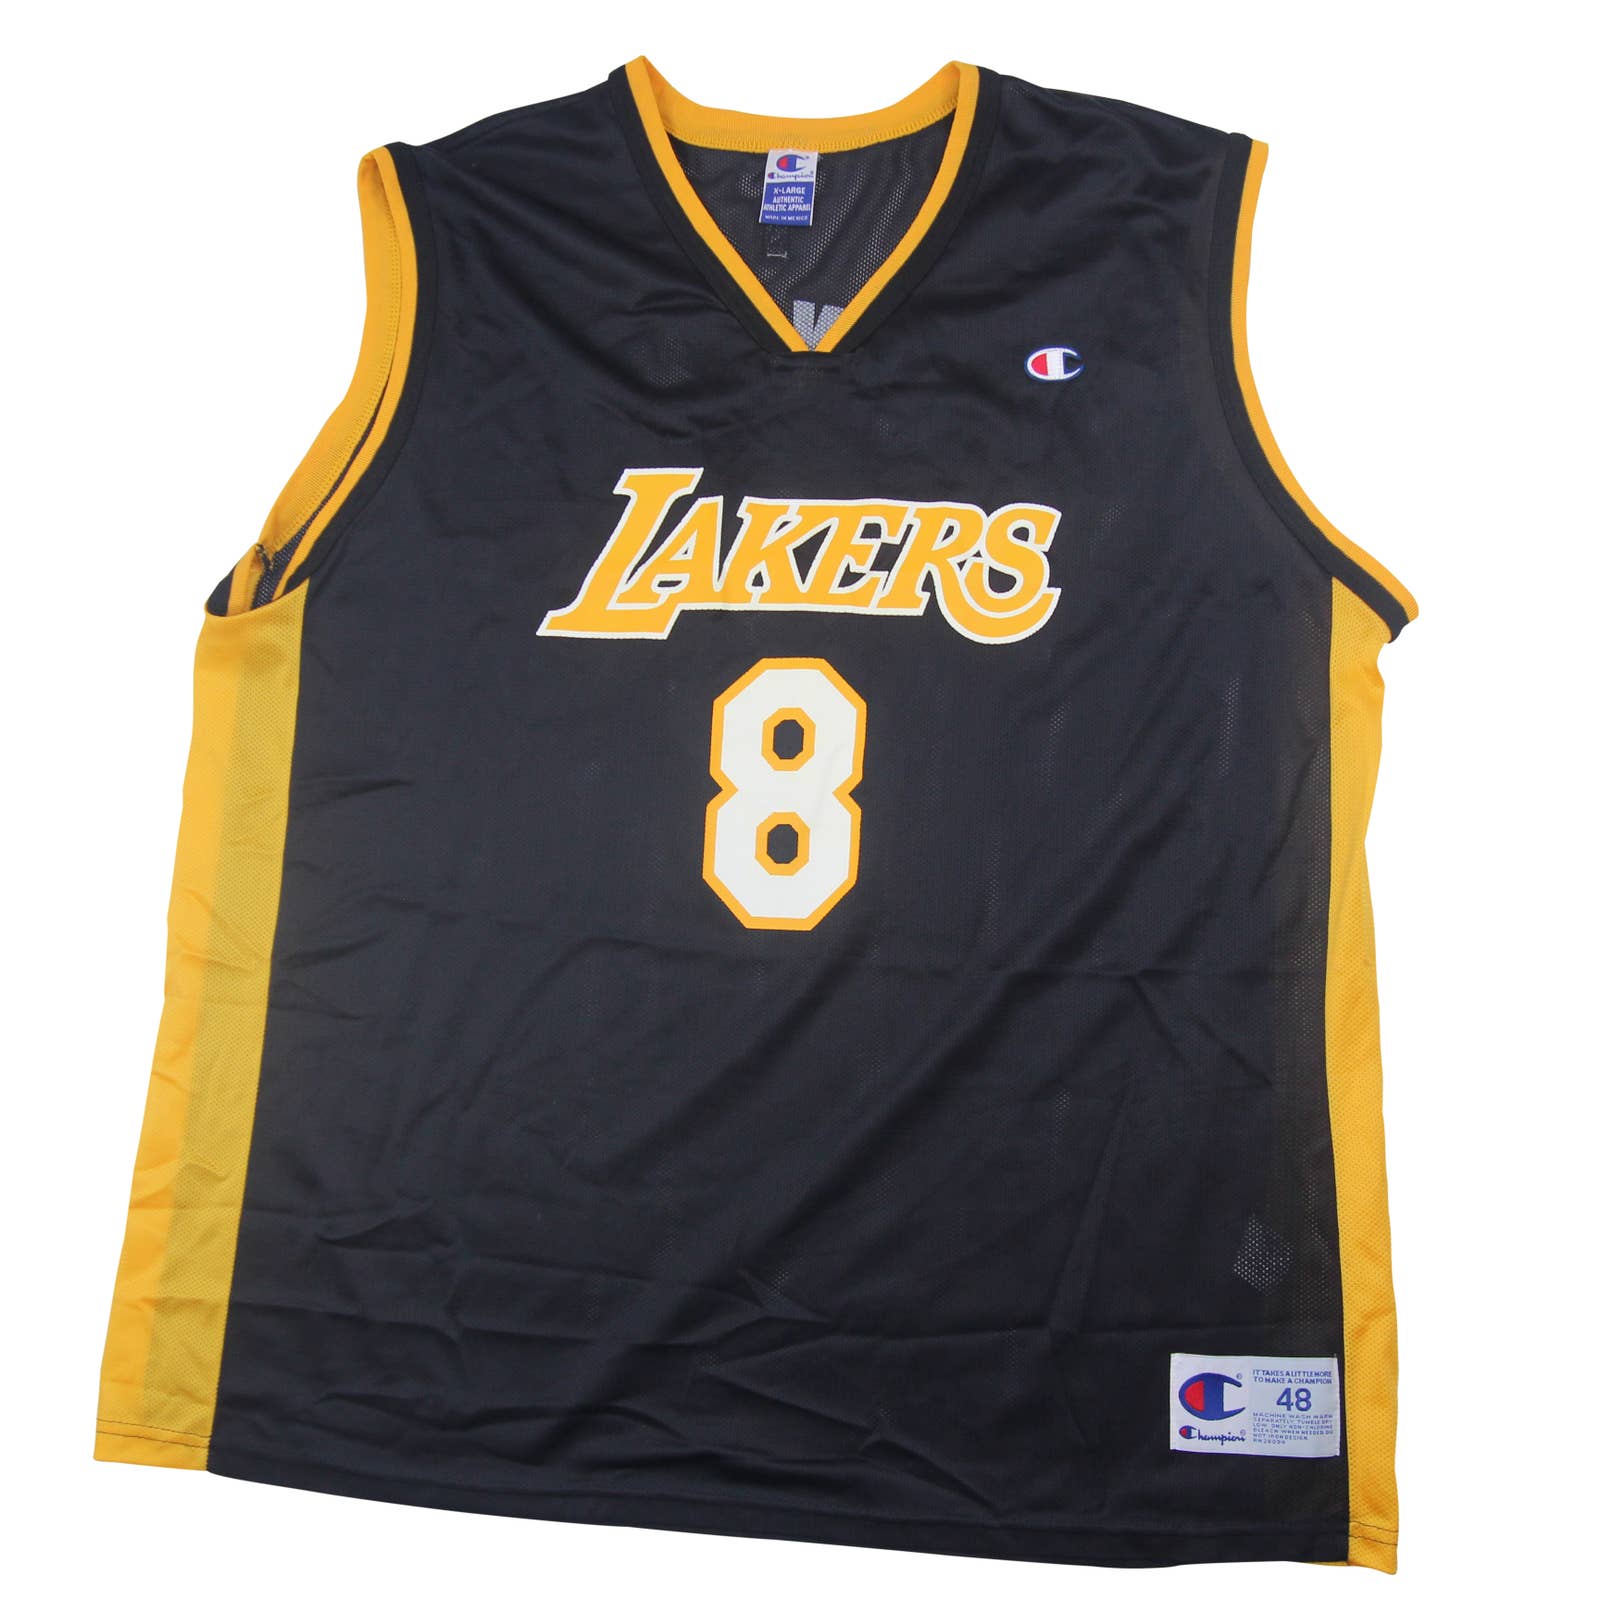 Lakers #8 Kobe Bryant Retro Yellow Jersey